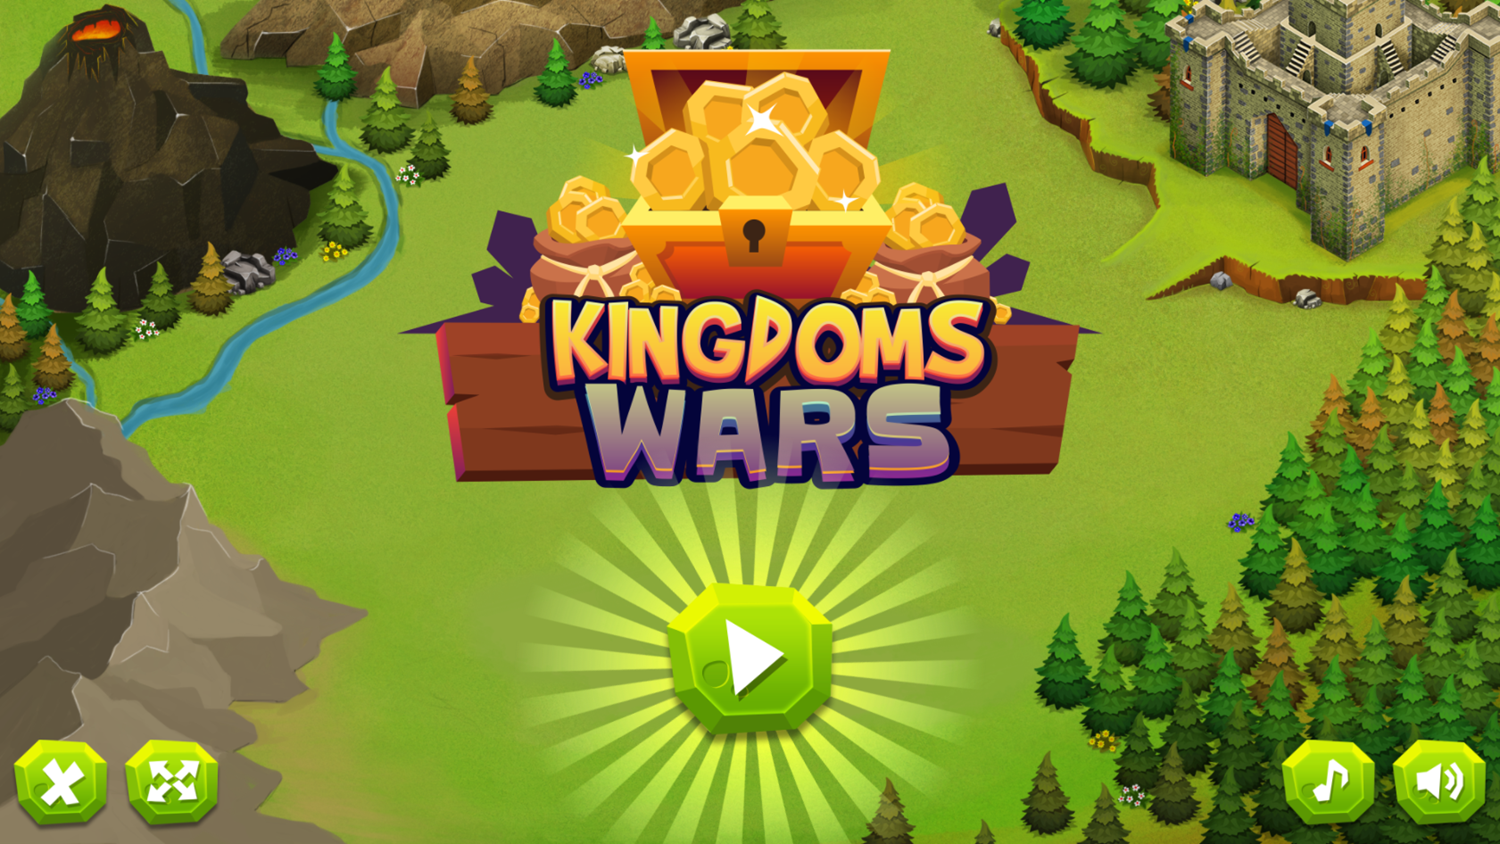 Kingdoms Wars Game Welcome Screen Screenshot.